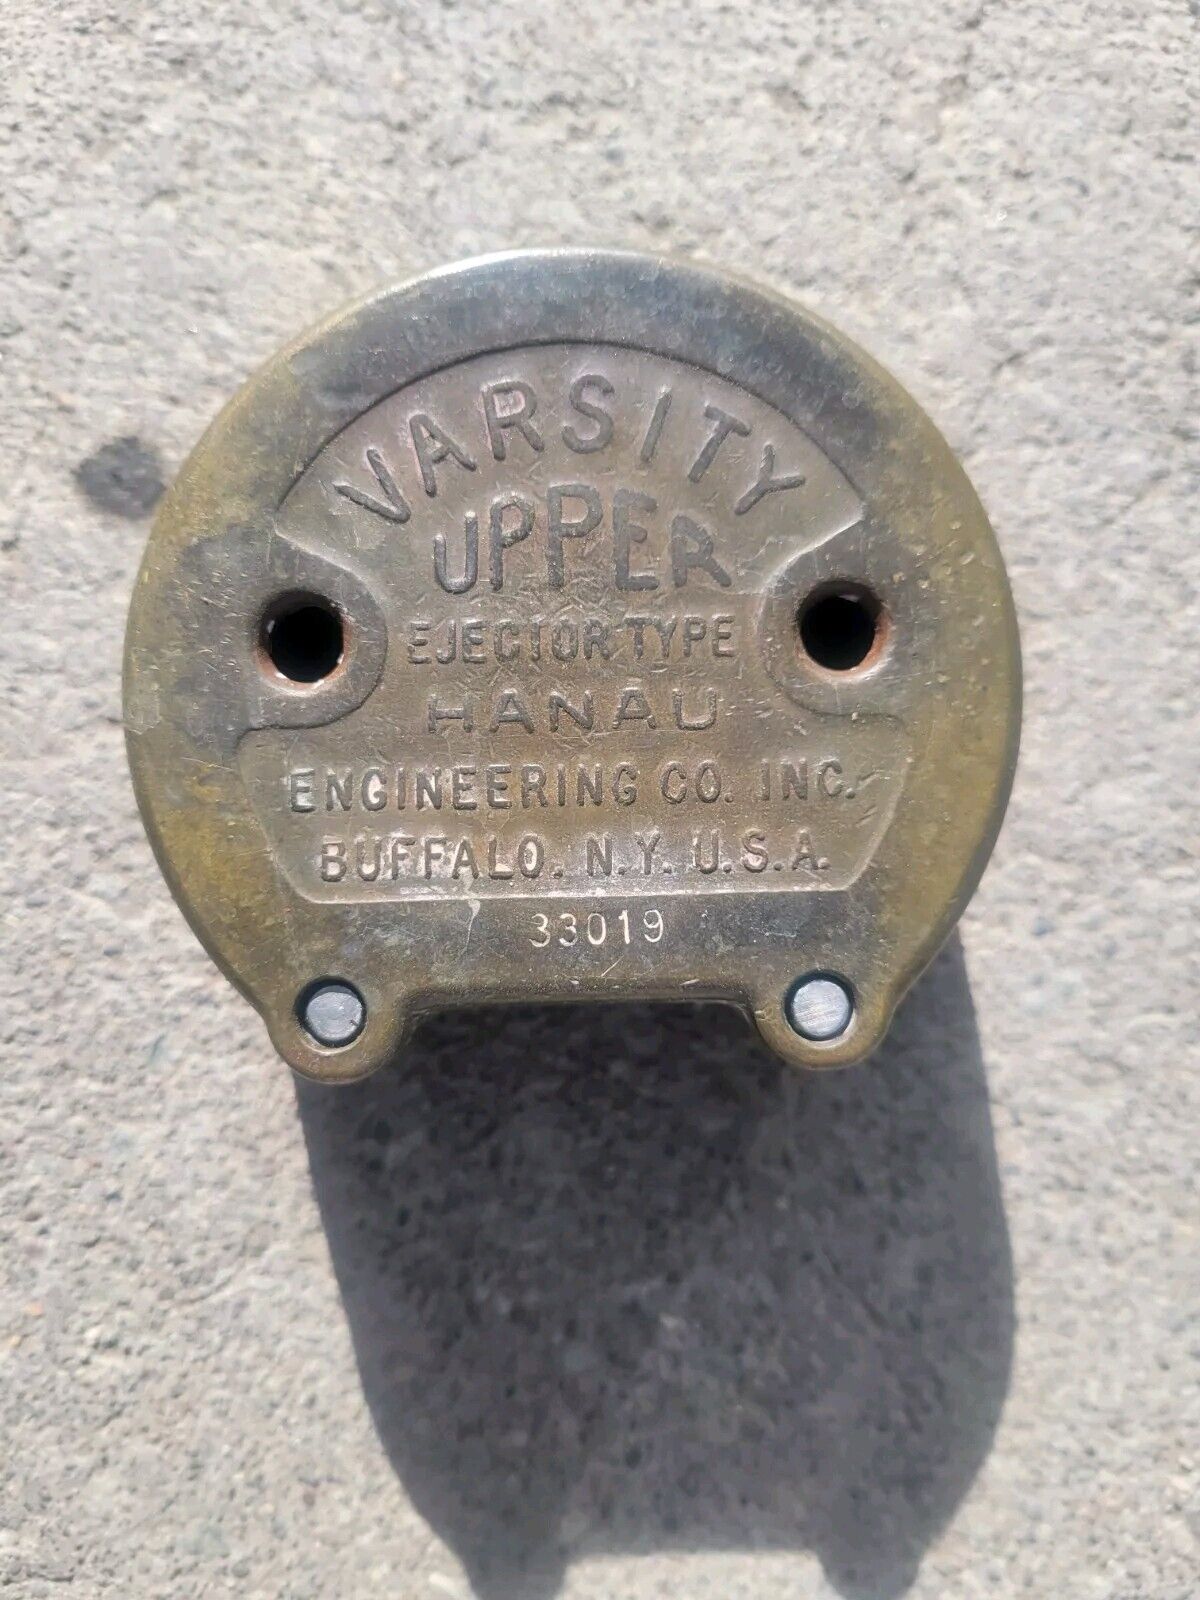 Vintage Hanau Varsity Upper Ejector Type Brass Dental Denture Flask Mold